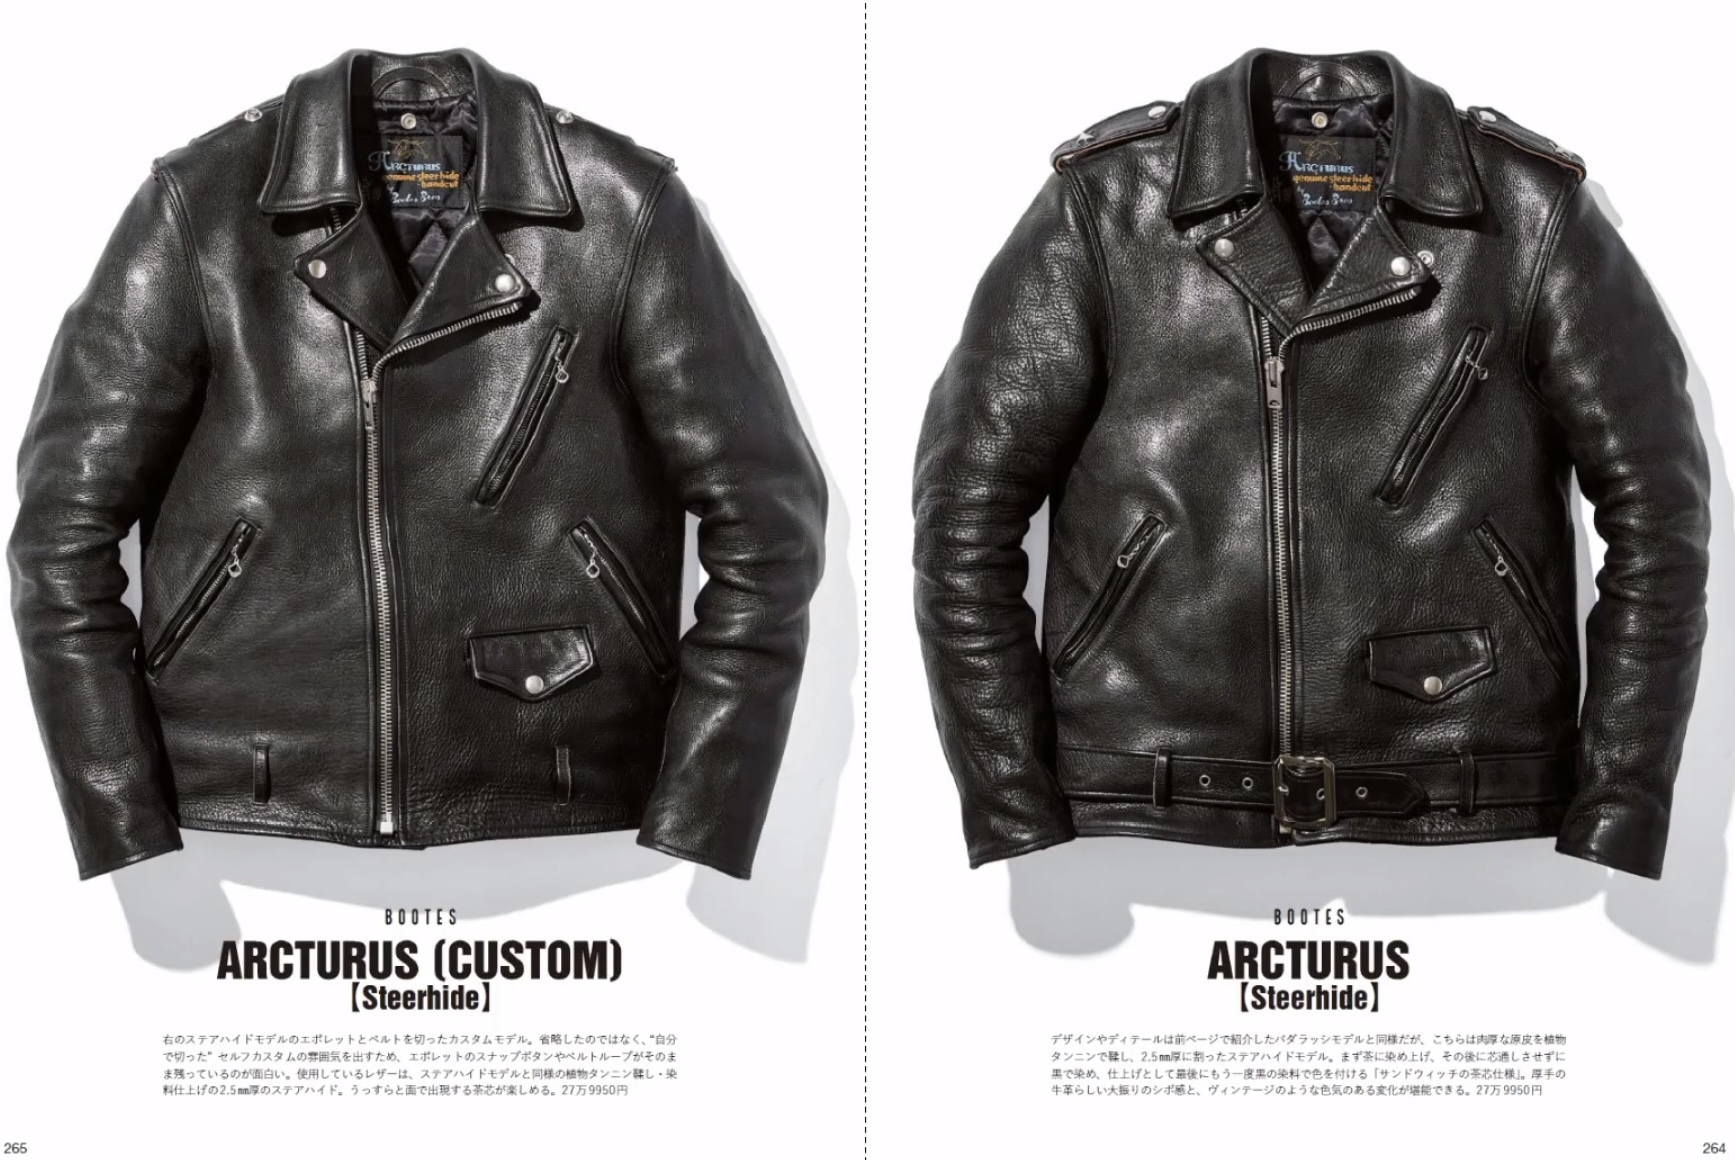 Japanese Magazines on Vintage Jacket and Etc | Vintage Leather Jackets ...